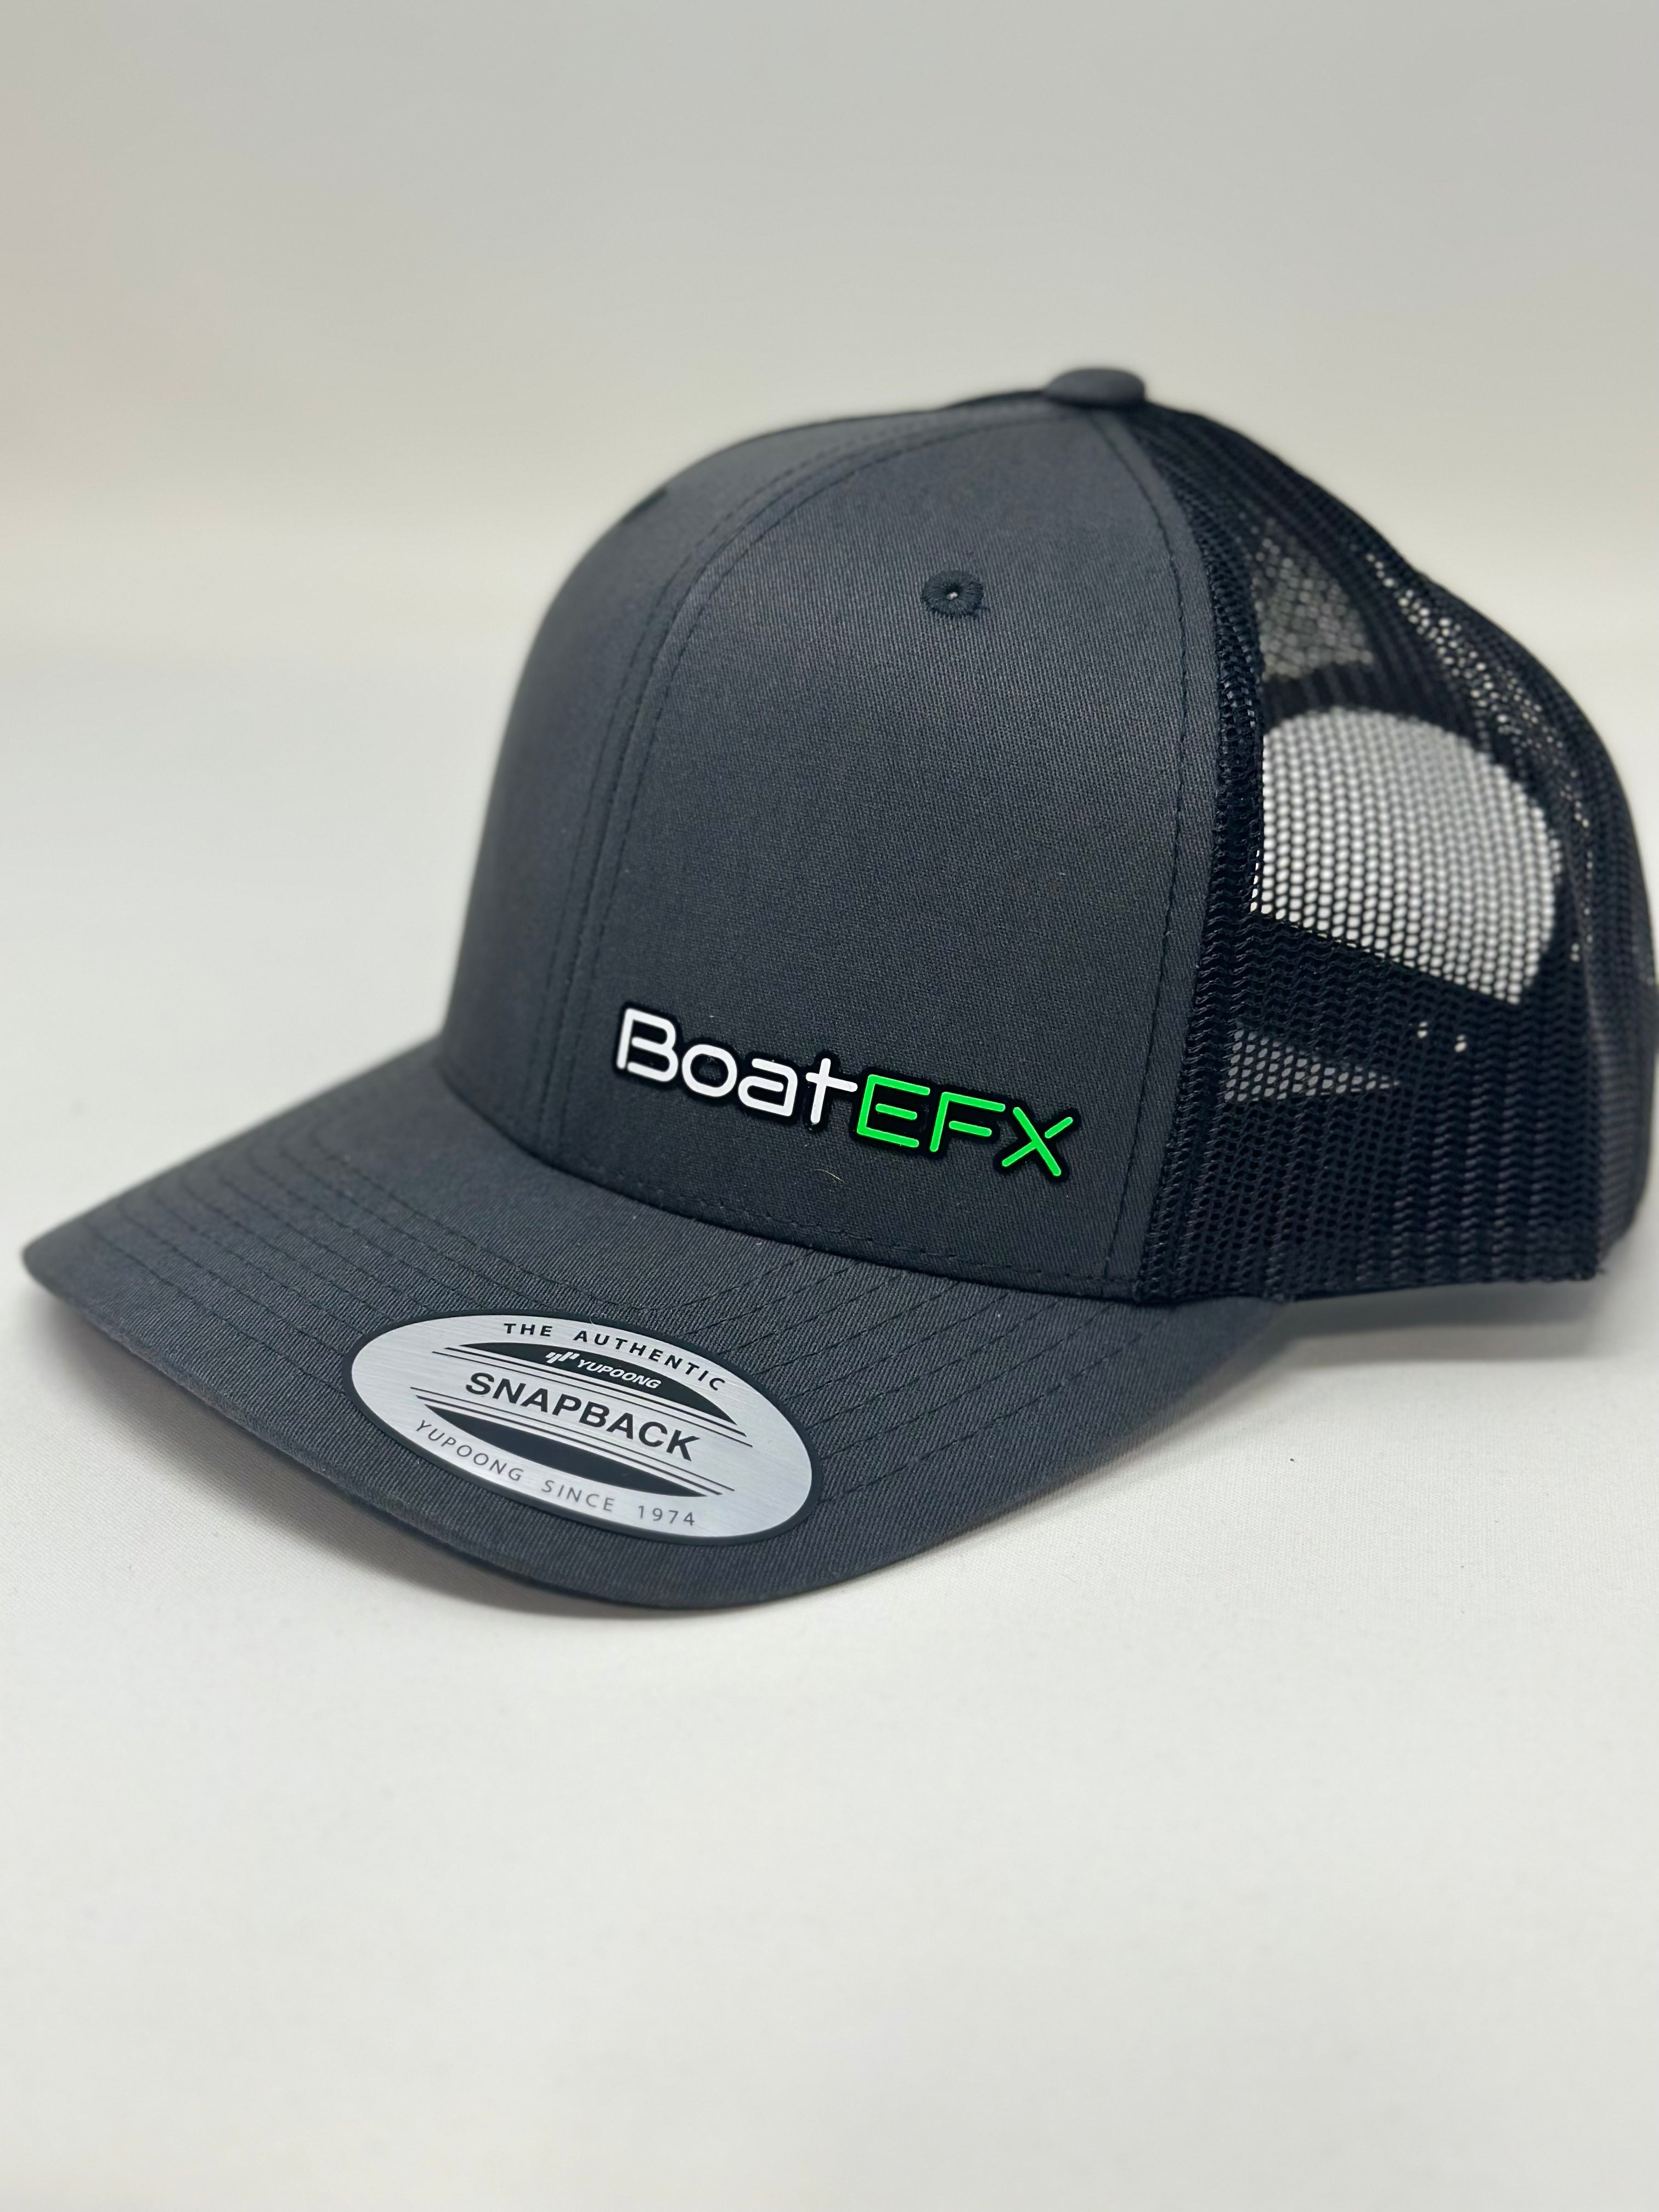 BoatEFX Snap-Back Mesh Hat - BoatEFX